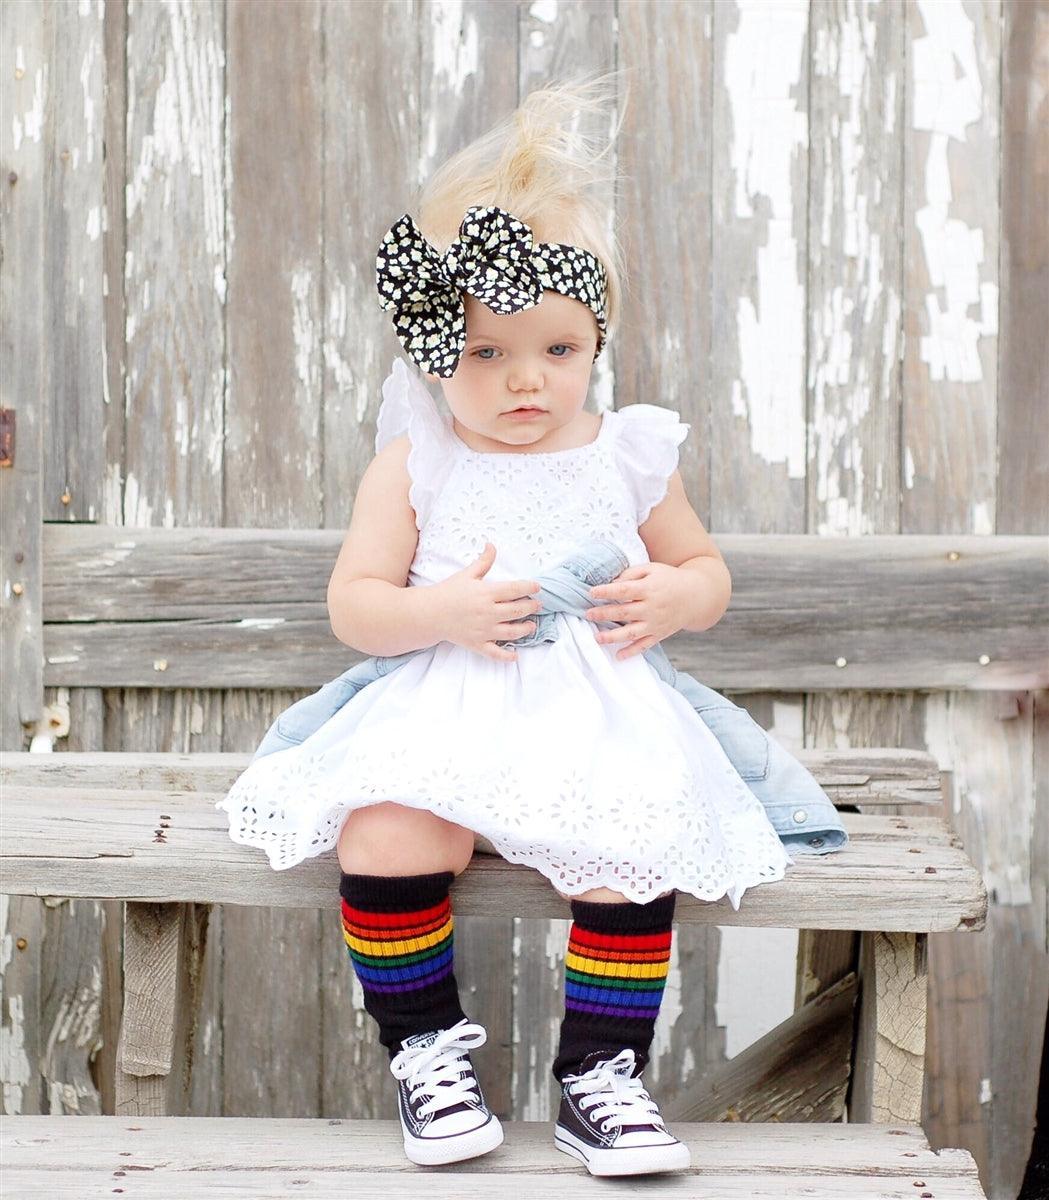 Brave Baby/Toddler Tube Sock - Pride Socks - The Sock Monster